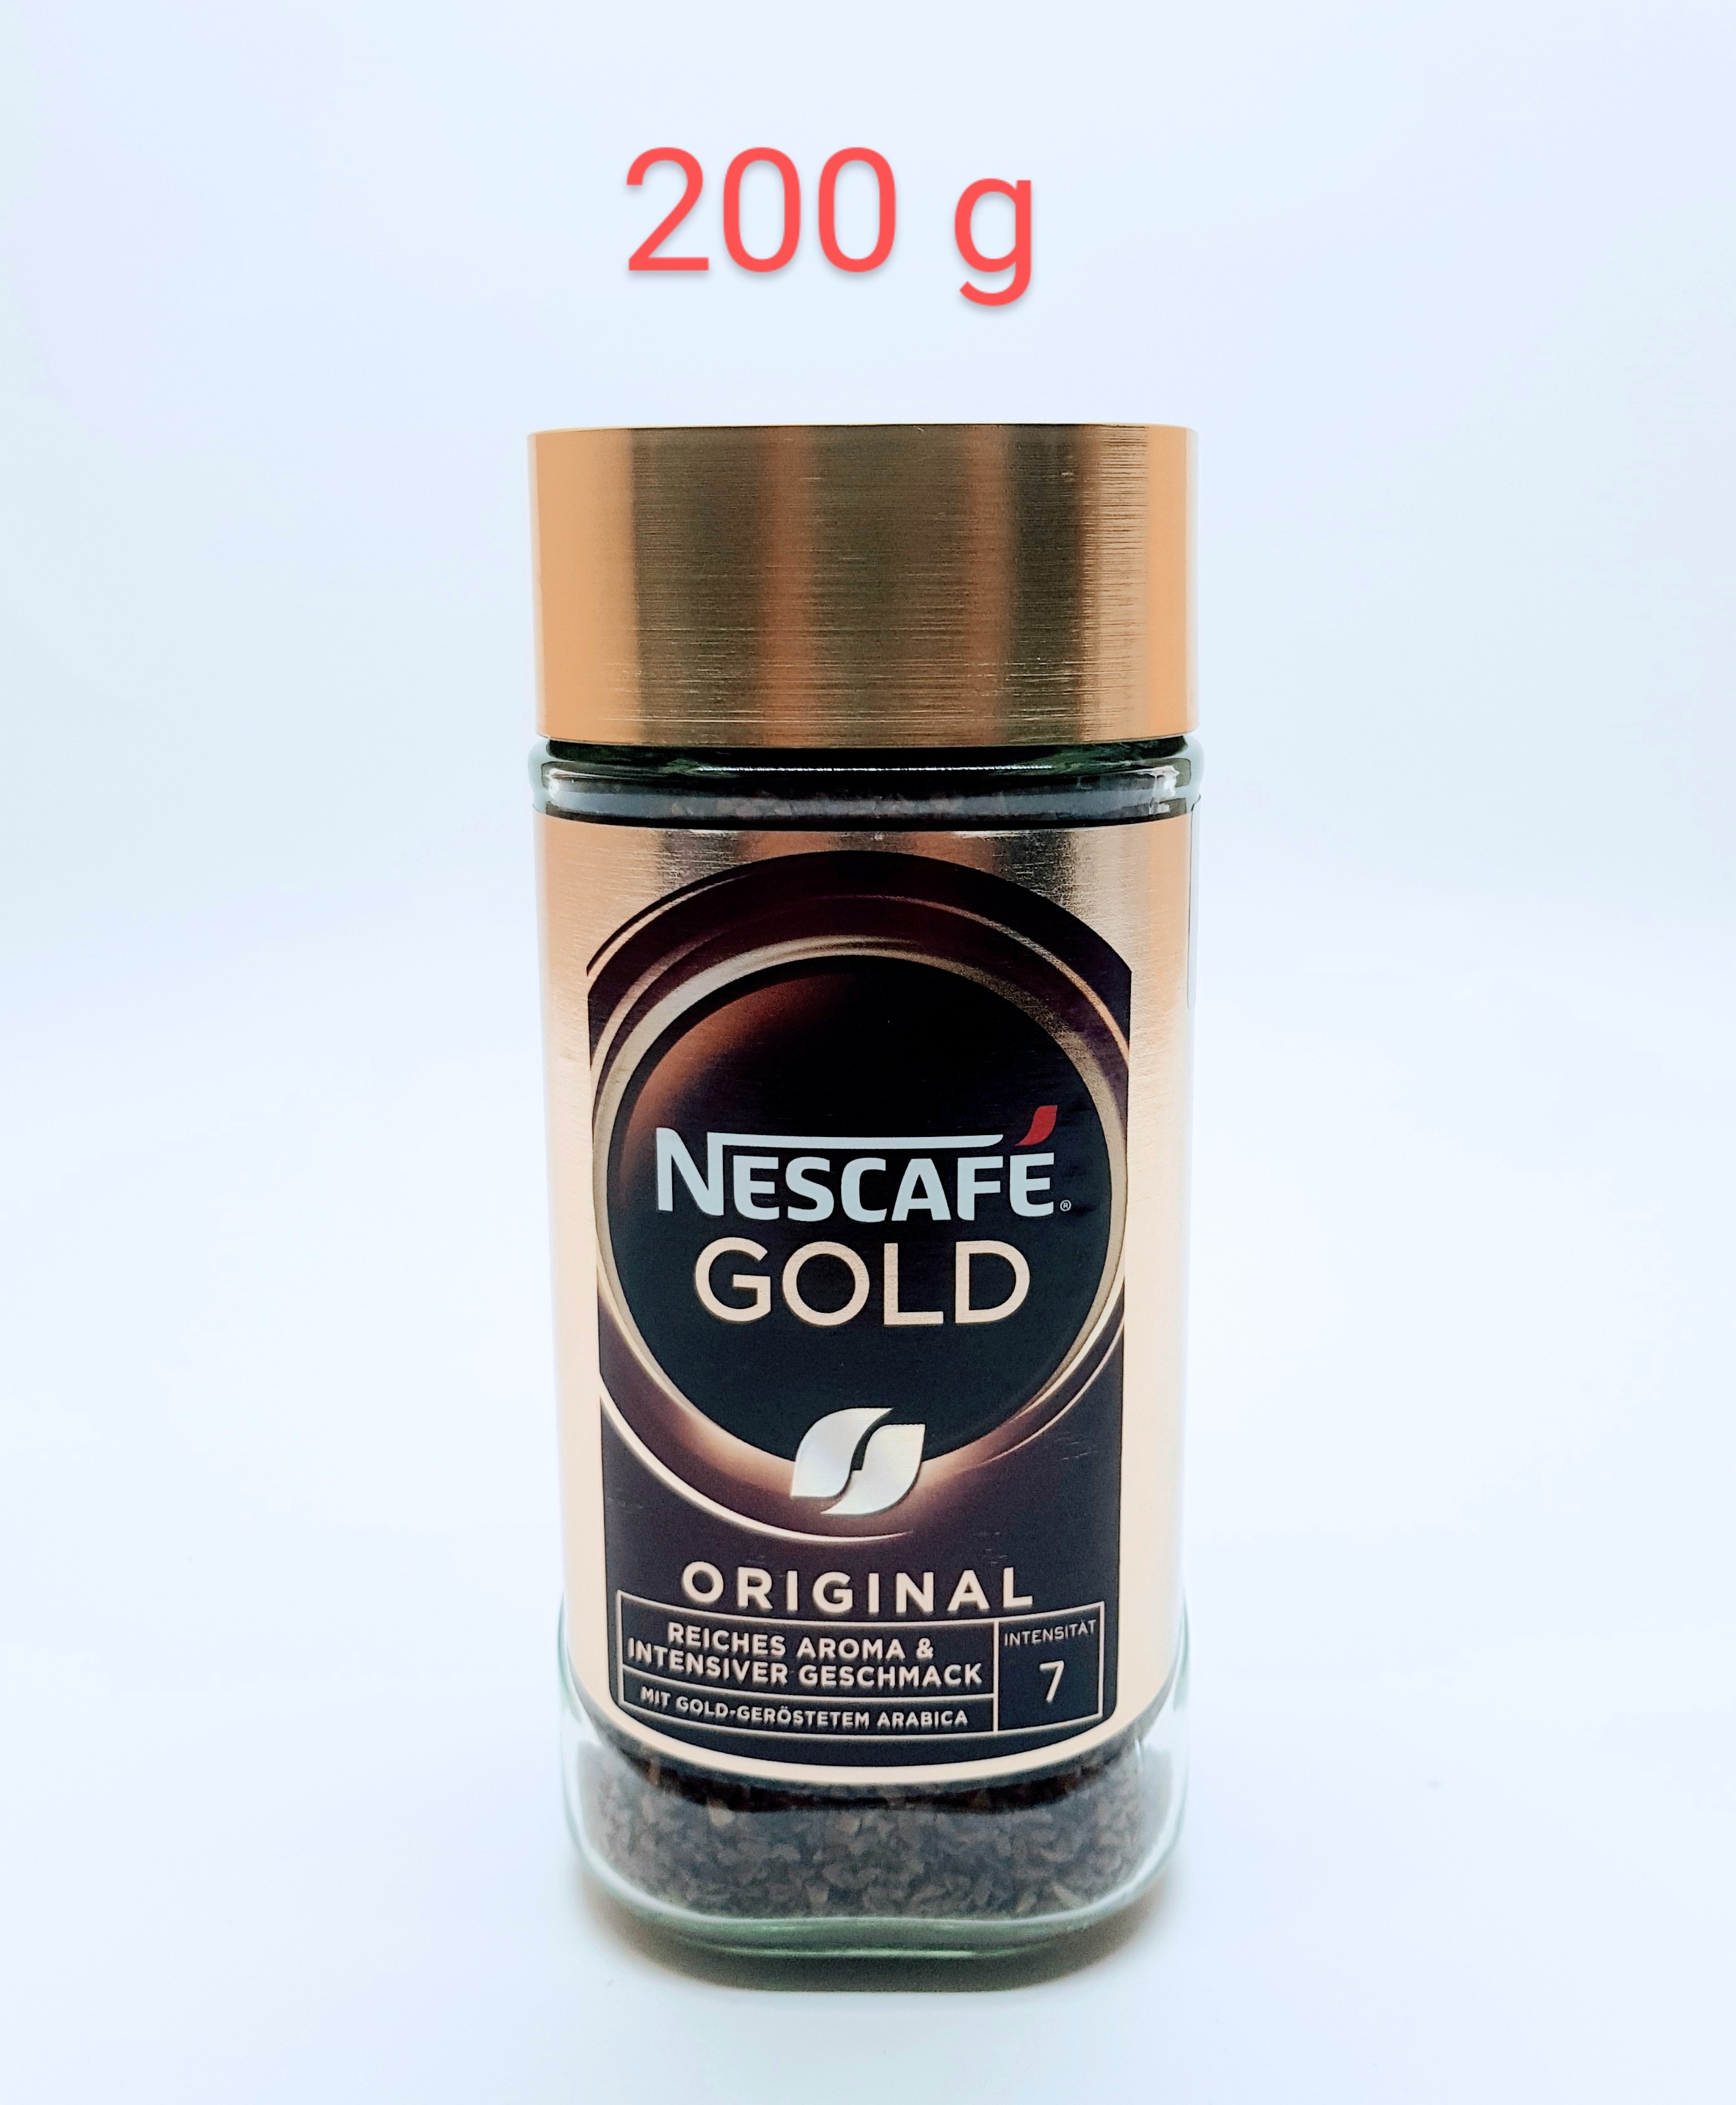 Nescafe Gold 200g (Cargo)